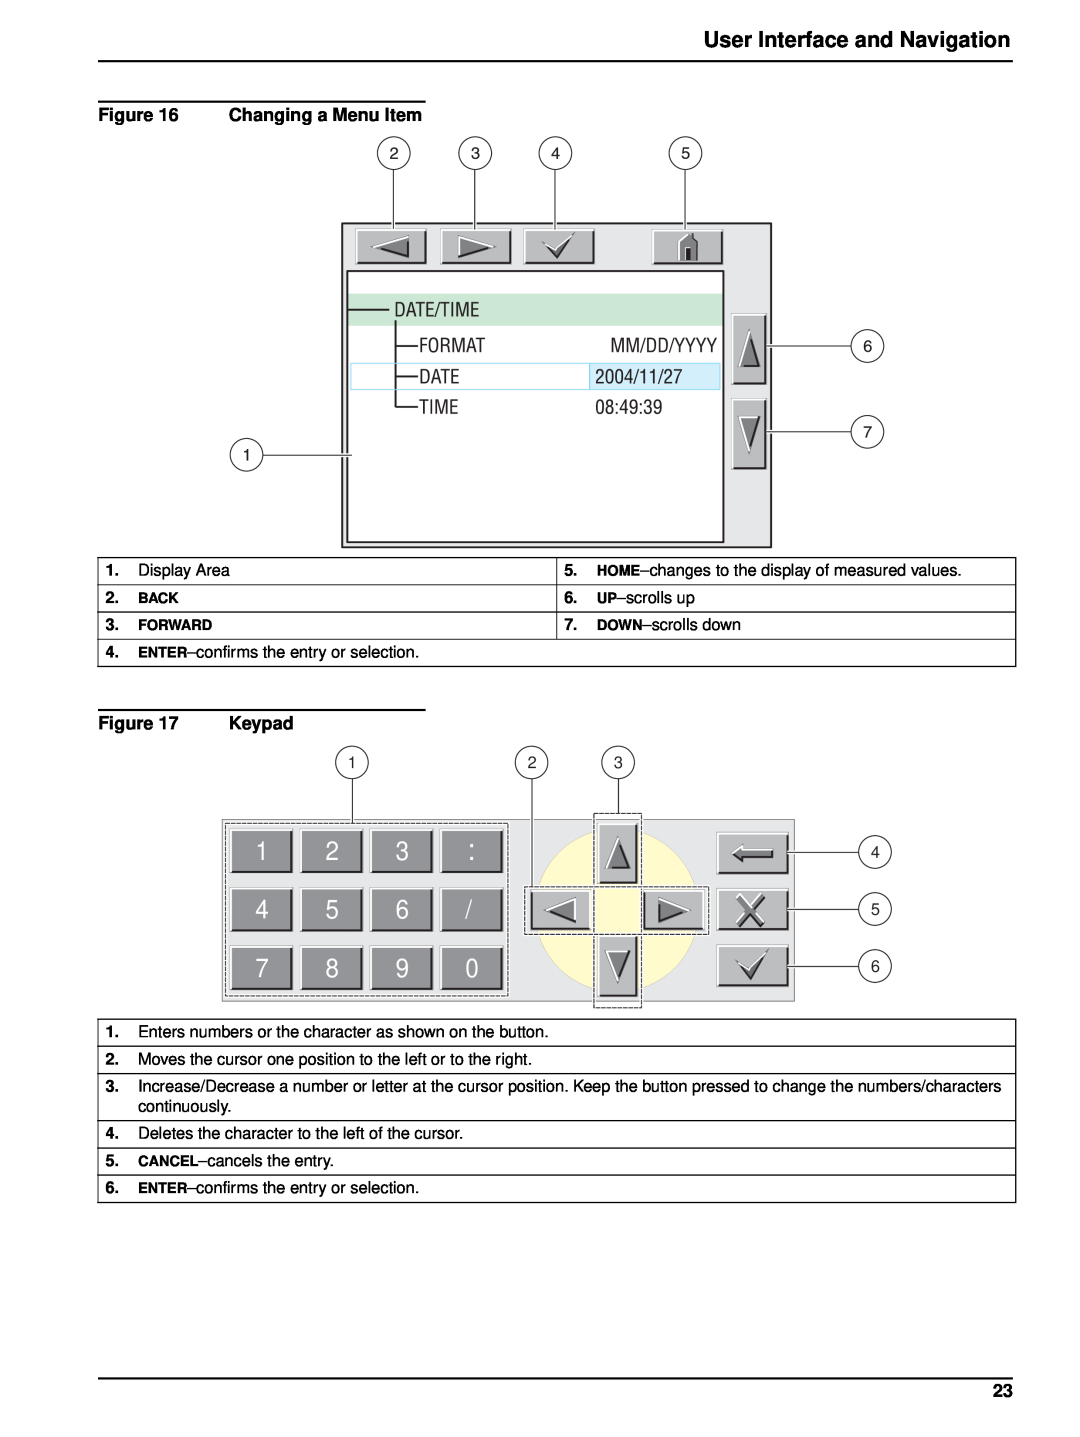 Hach 6120118 user manual User Interface and Navigation, Changing a Menu Item, Keypad 